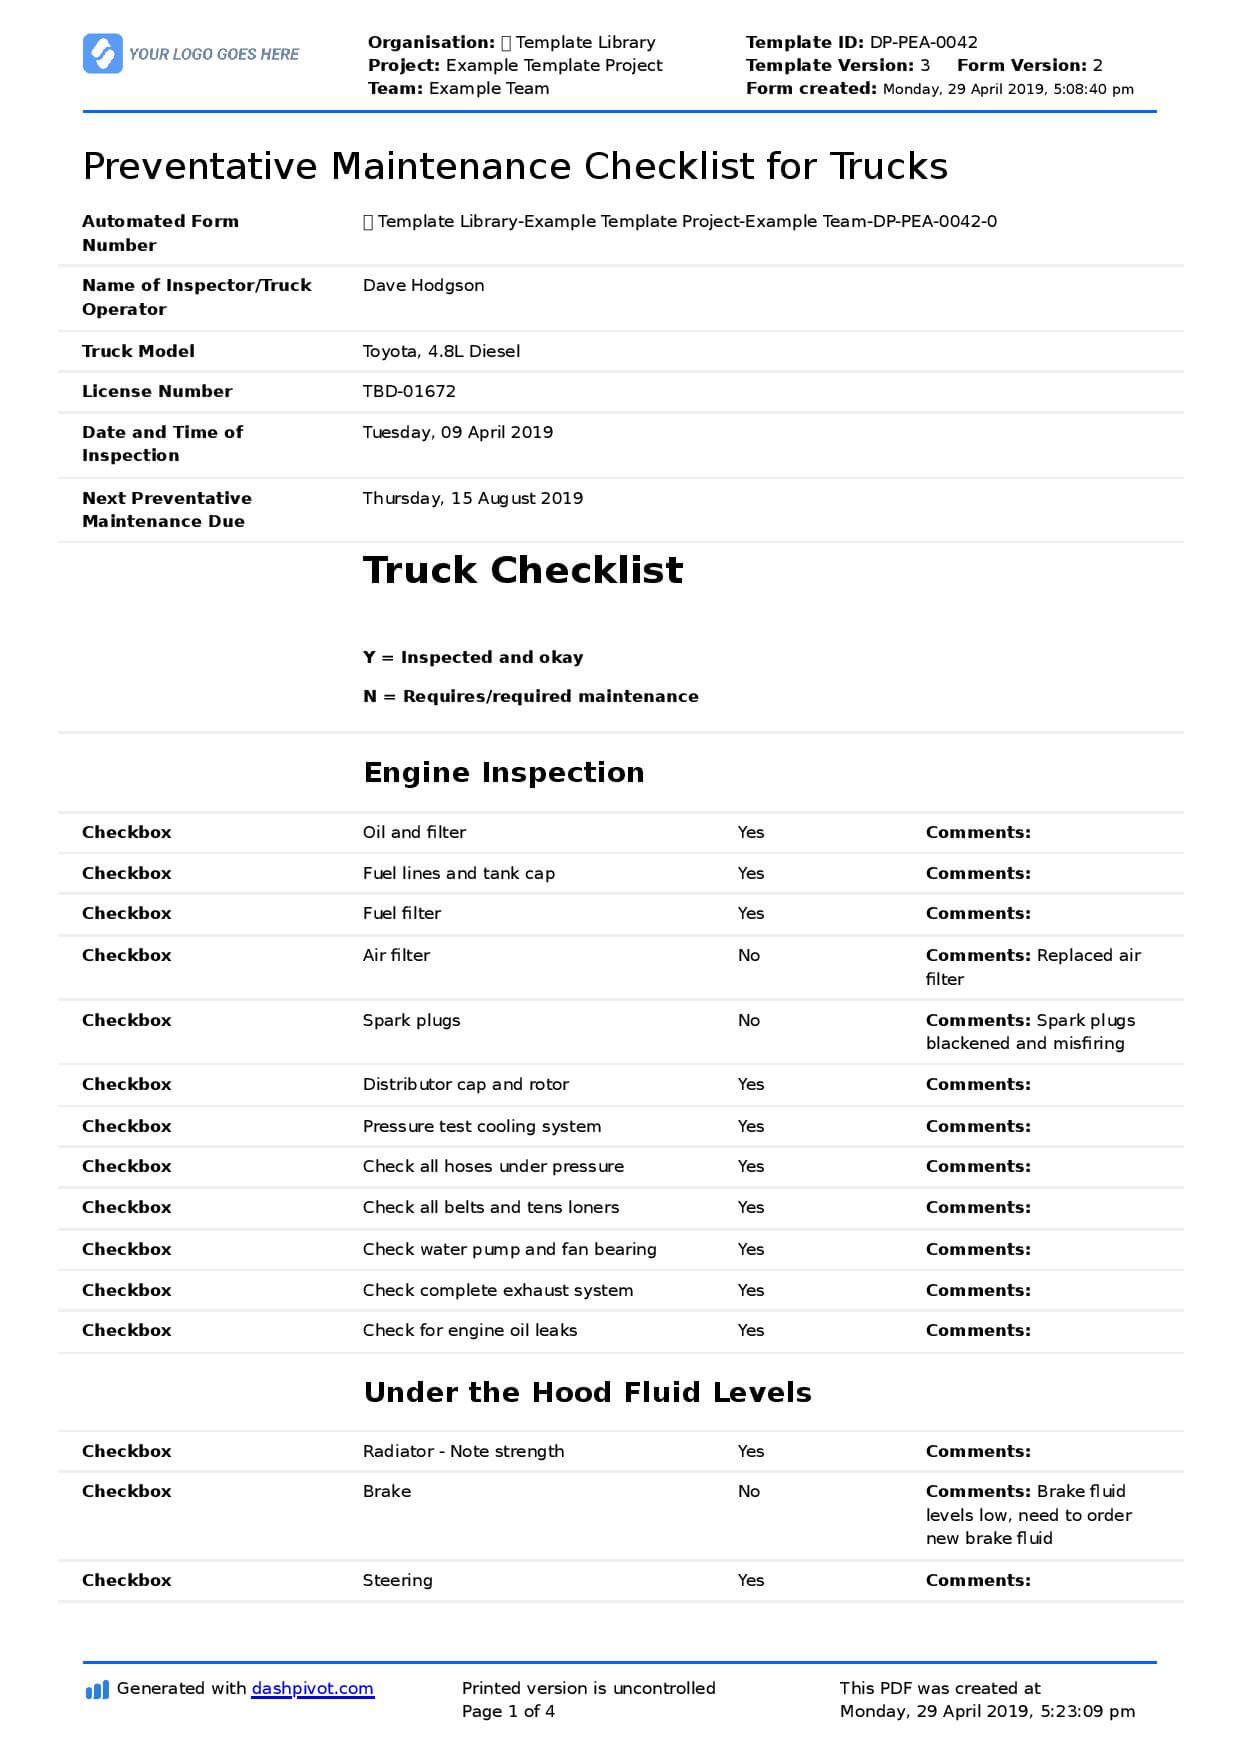 Preventative Maintenance Checklist For Trucks (Diesel Trucks Pertaining To Computer Maintenance Report Template